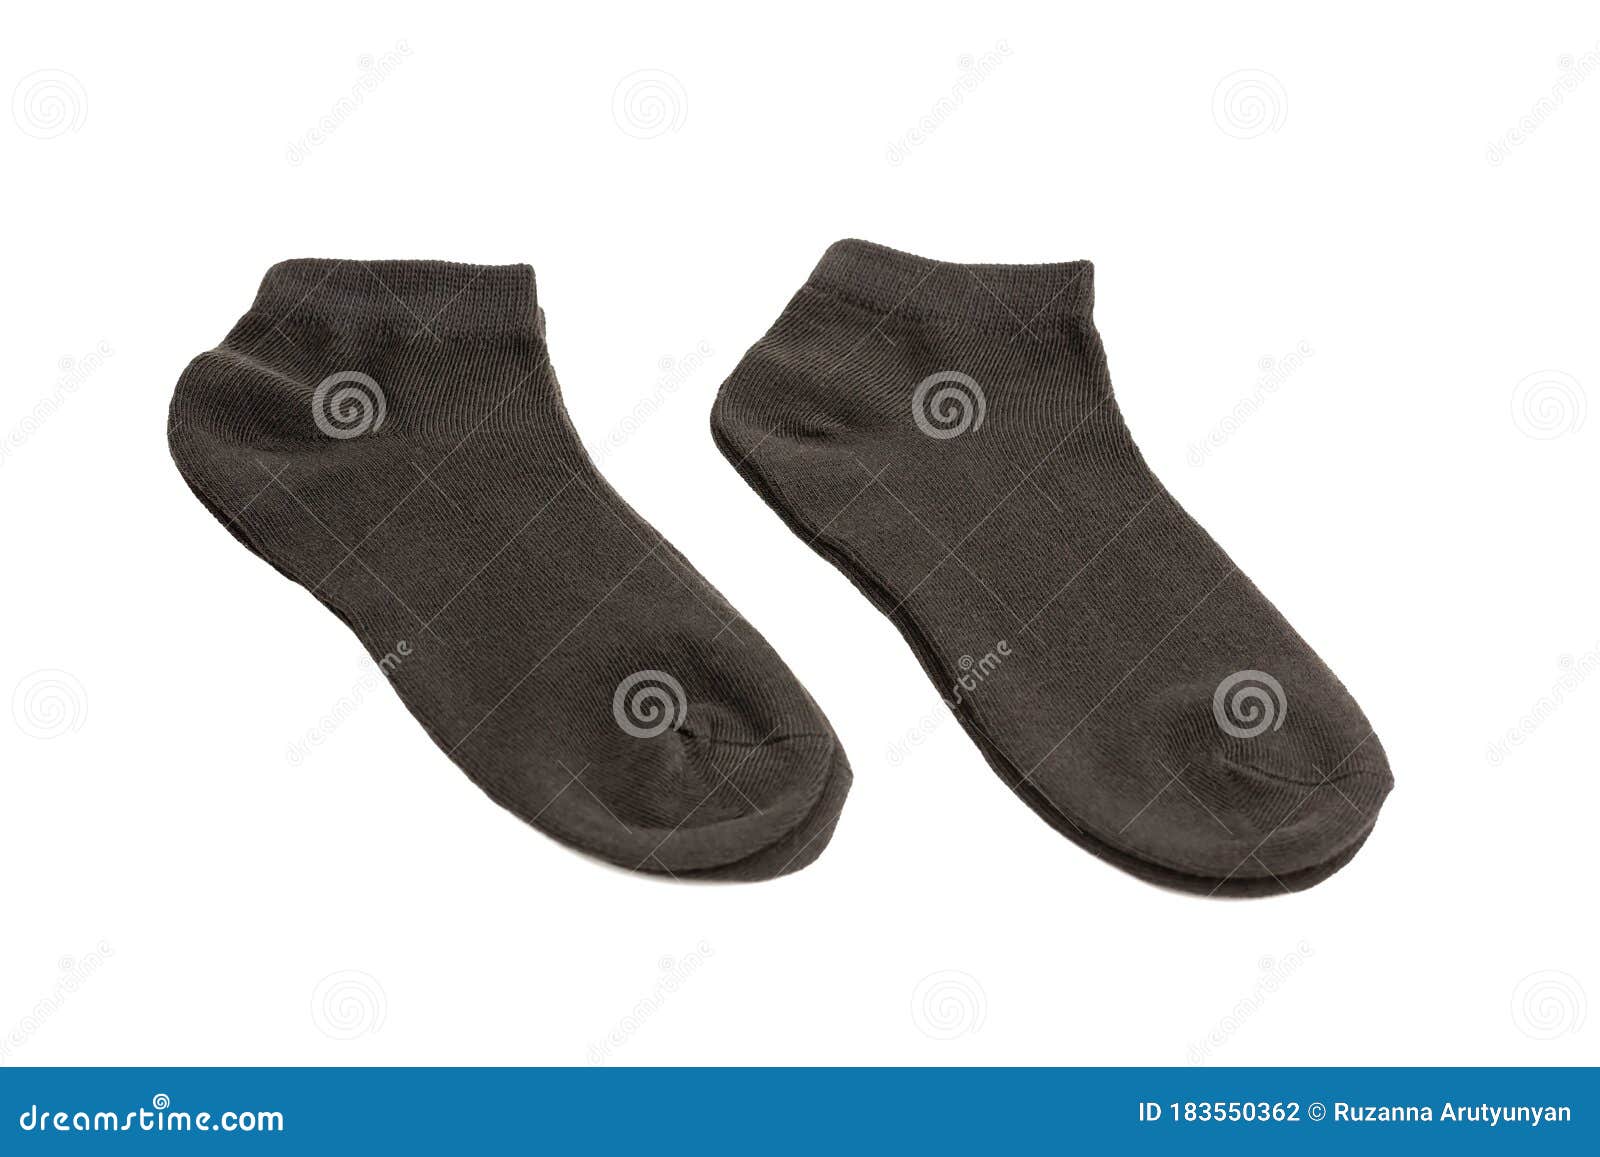 Black socks stock photo. Image of clothes, apparel, fashionable - 183550362